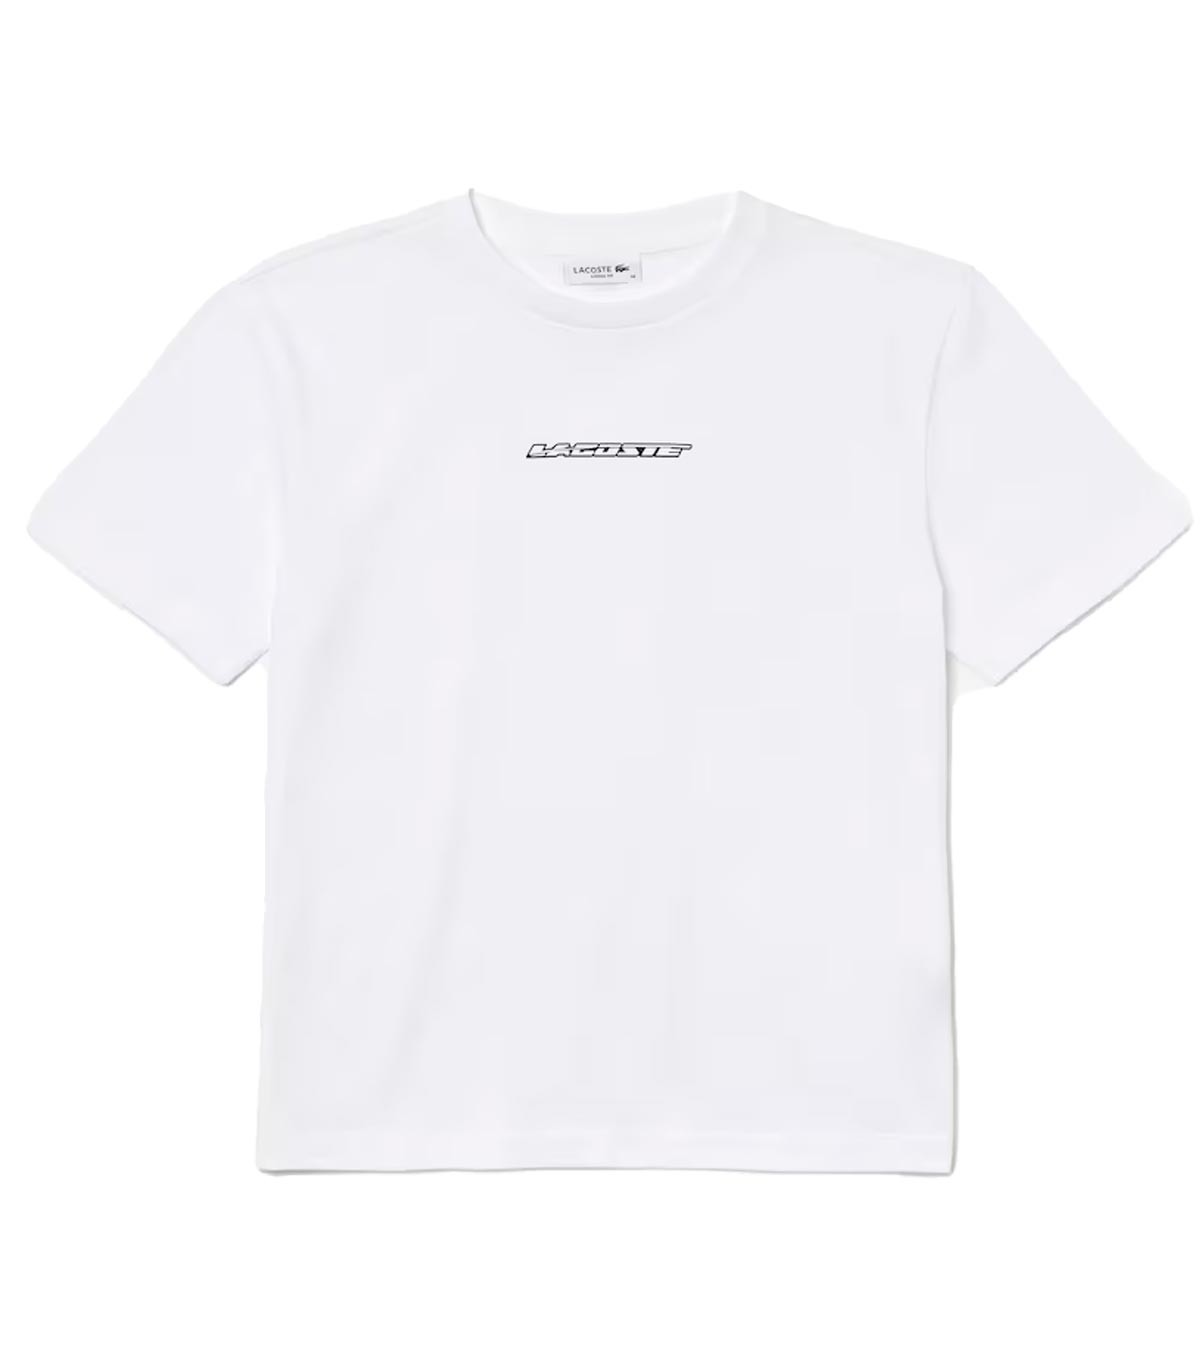 Lacoste - Camiseta Cols Roules - Blanco